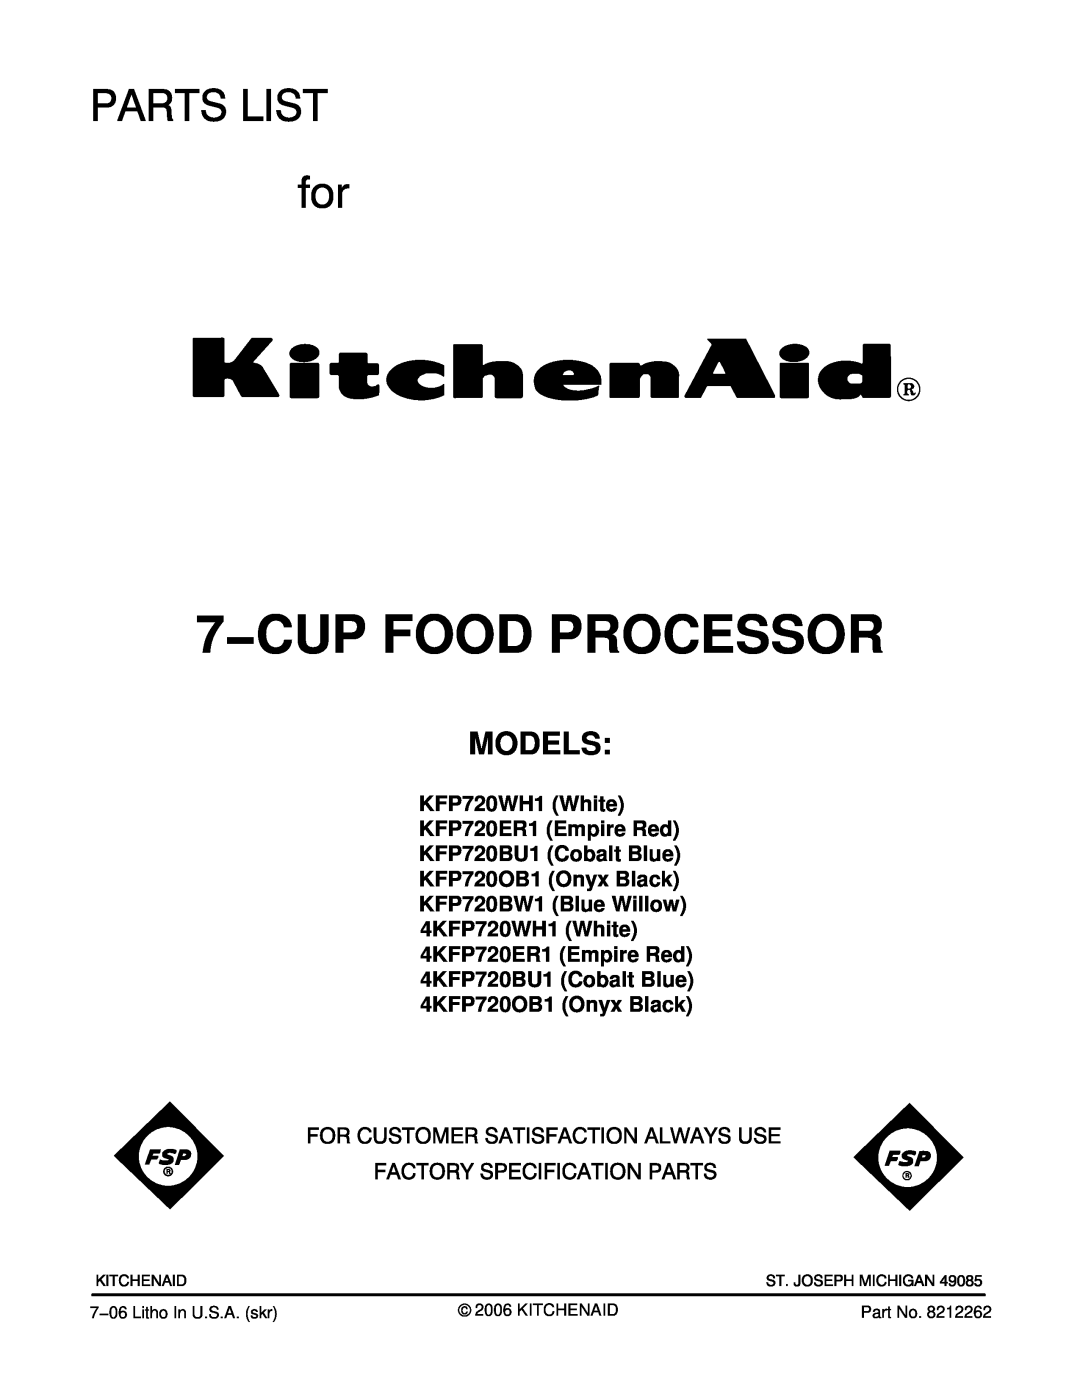 KitchenAid KFP720OB1 manual Models, KFP720WH1 White KFP720ER1 Empire Red KFP720BU1 Cobalt Blue, 7−CUP FOOD PROCESSOR 